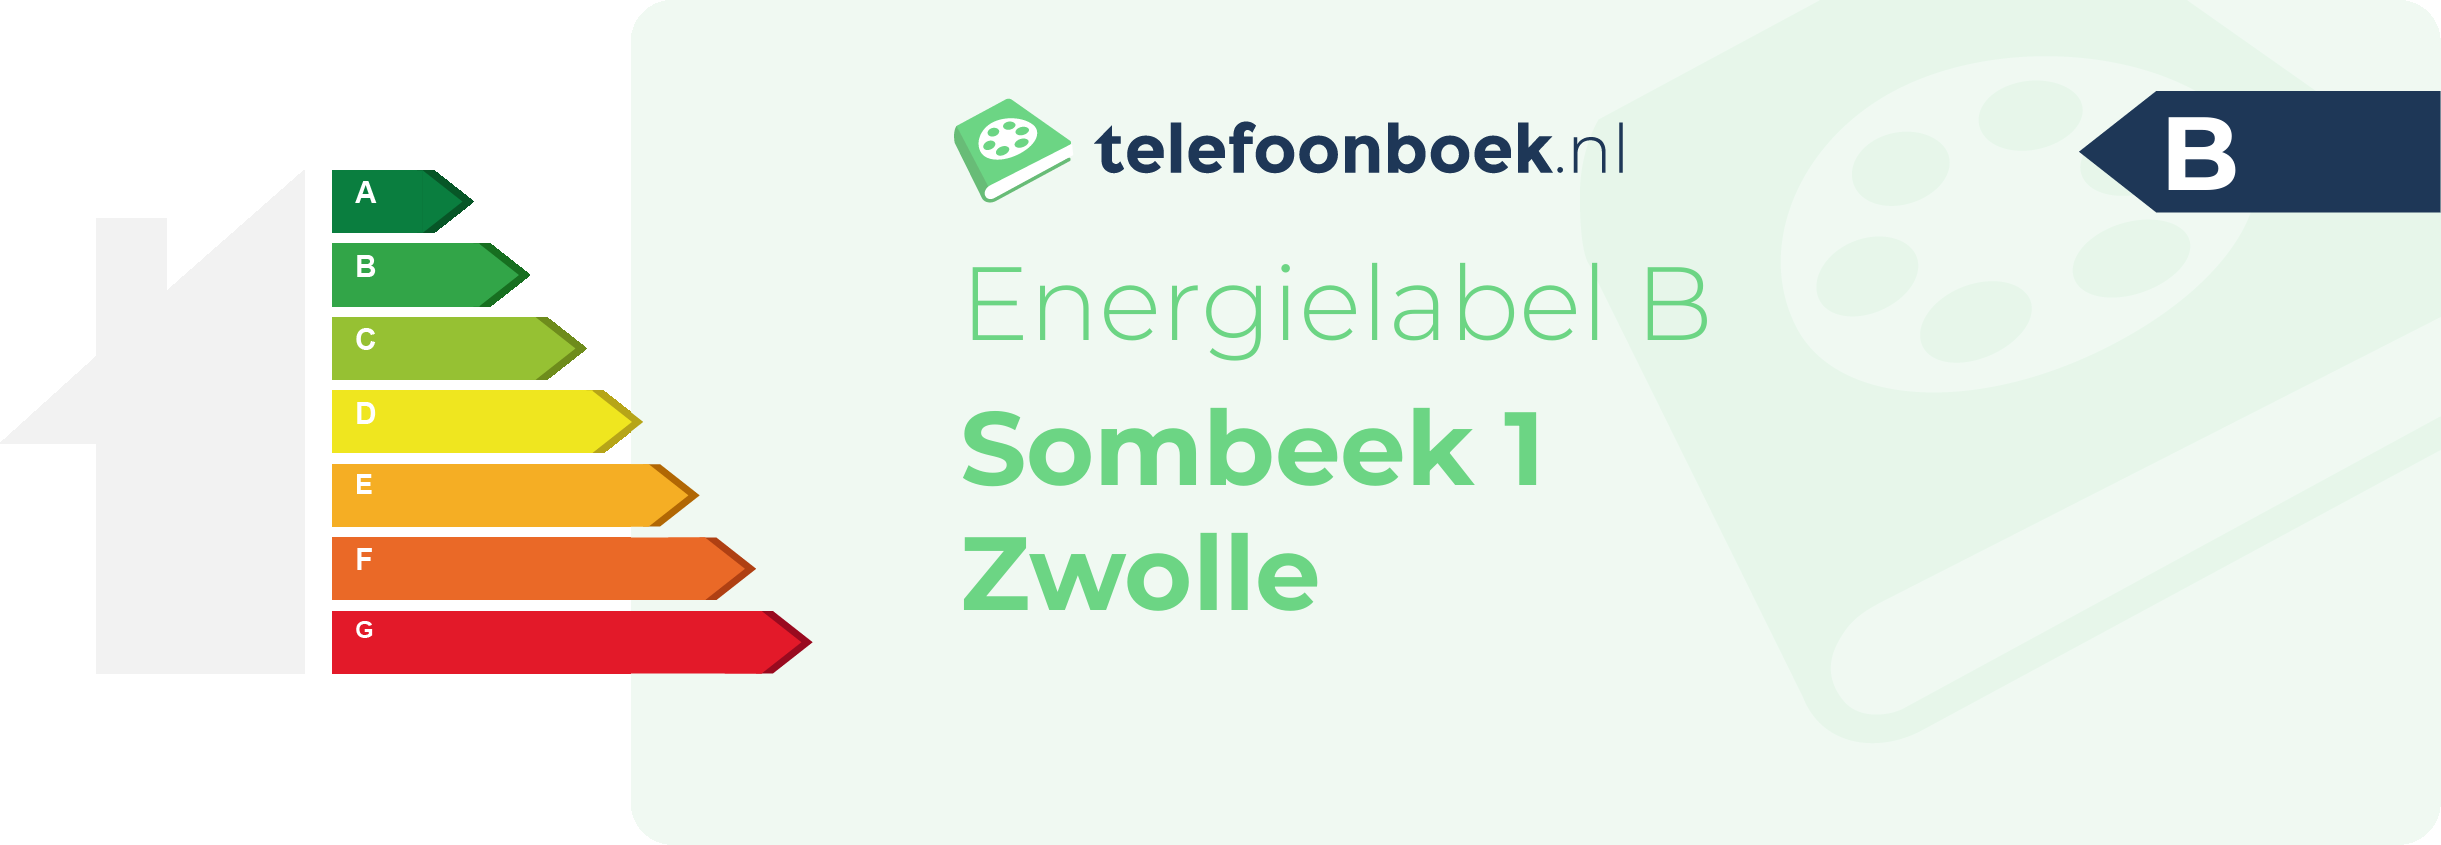 Energielabel Sombeek 1 Zwolle